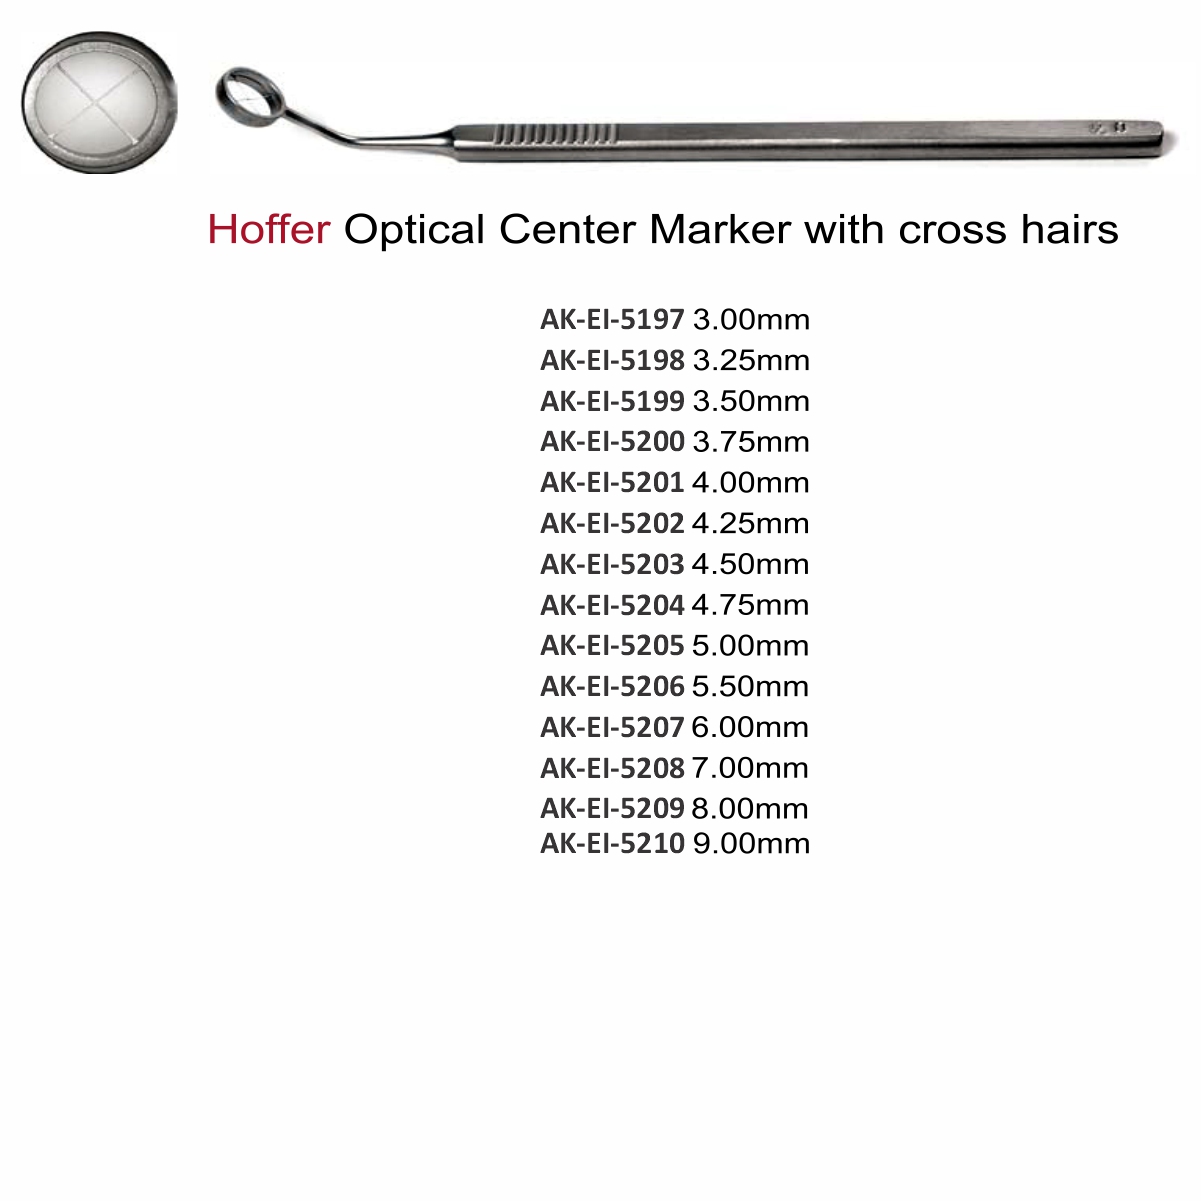 Hoffer Optical Center Marker